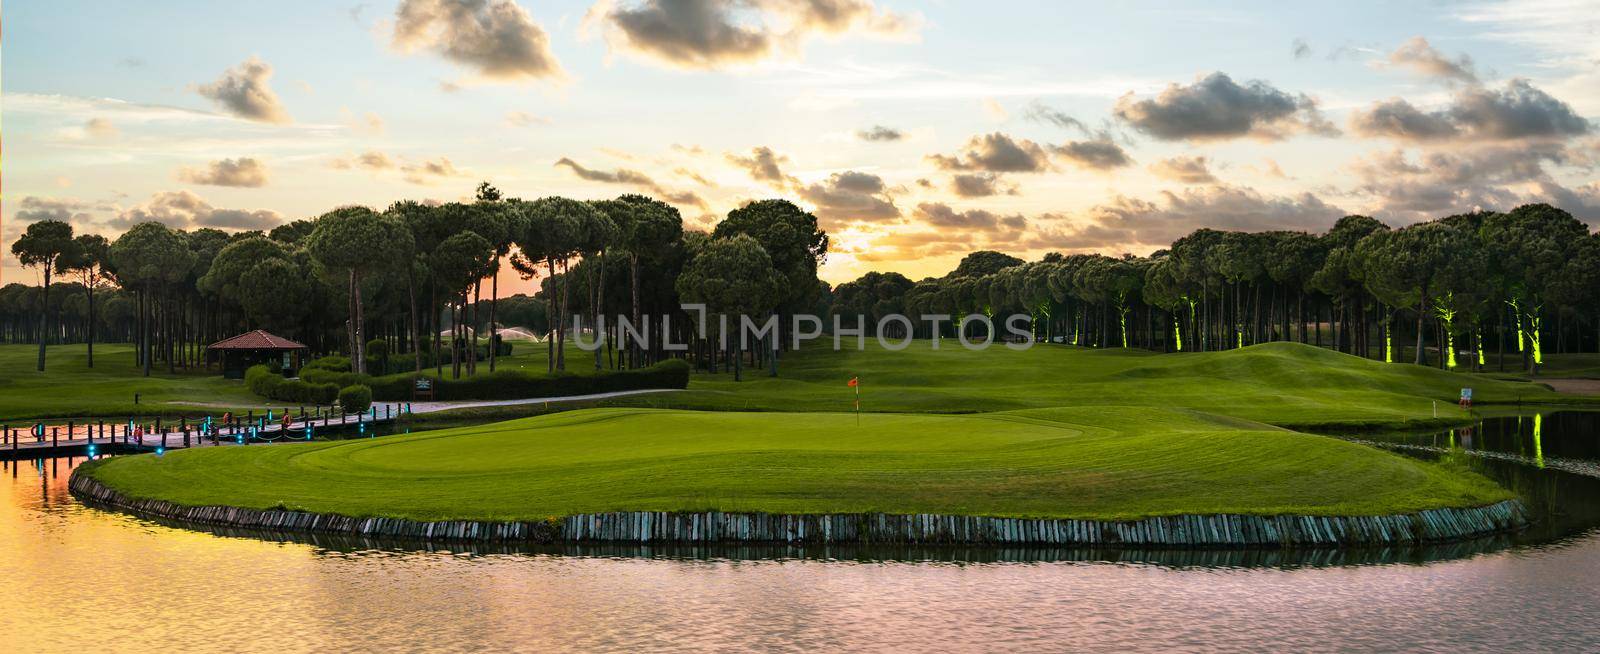 Golf course panorama at dramatic sunset with beautiful sky